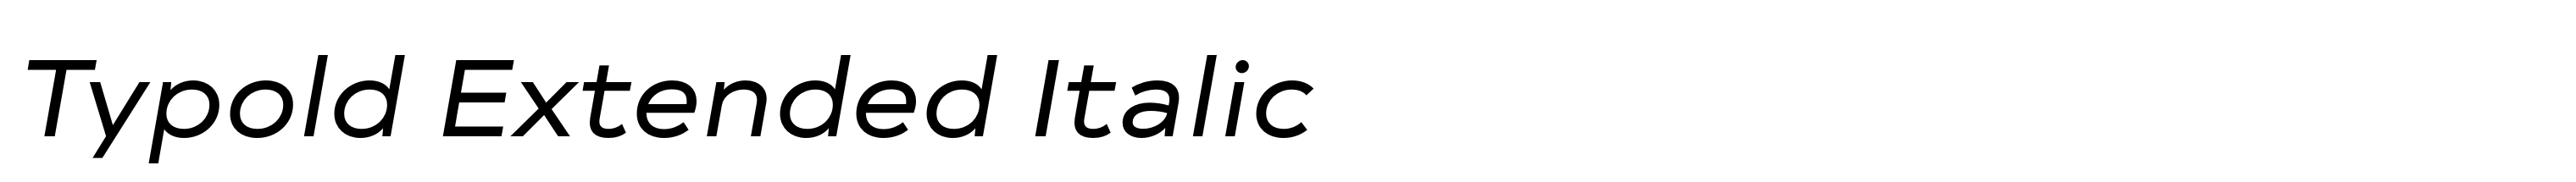 Typold Extended Italic